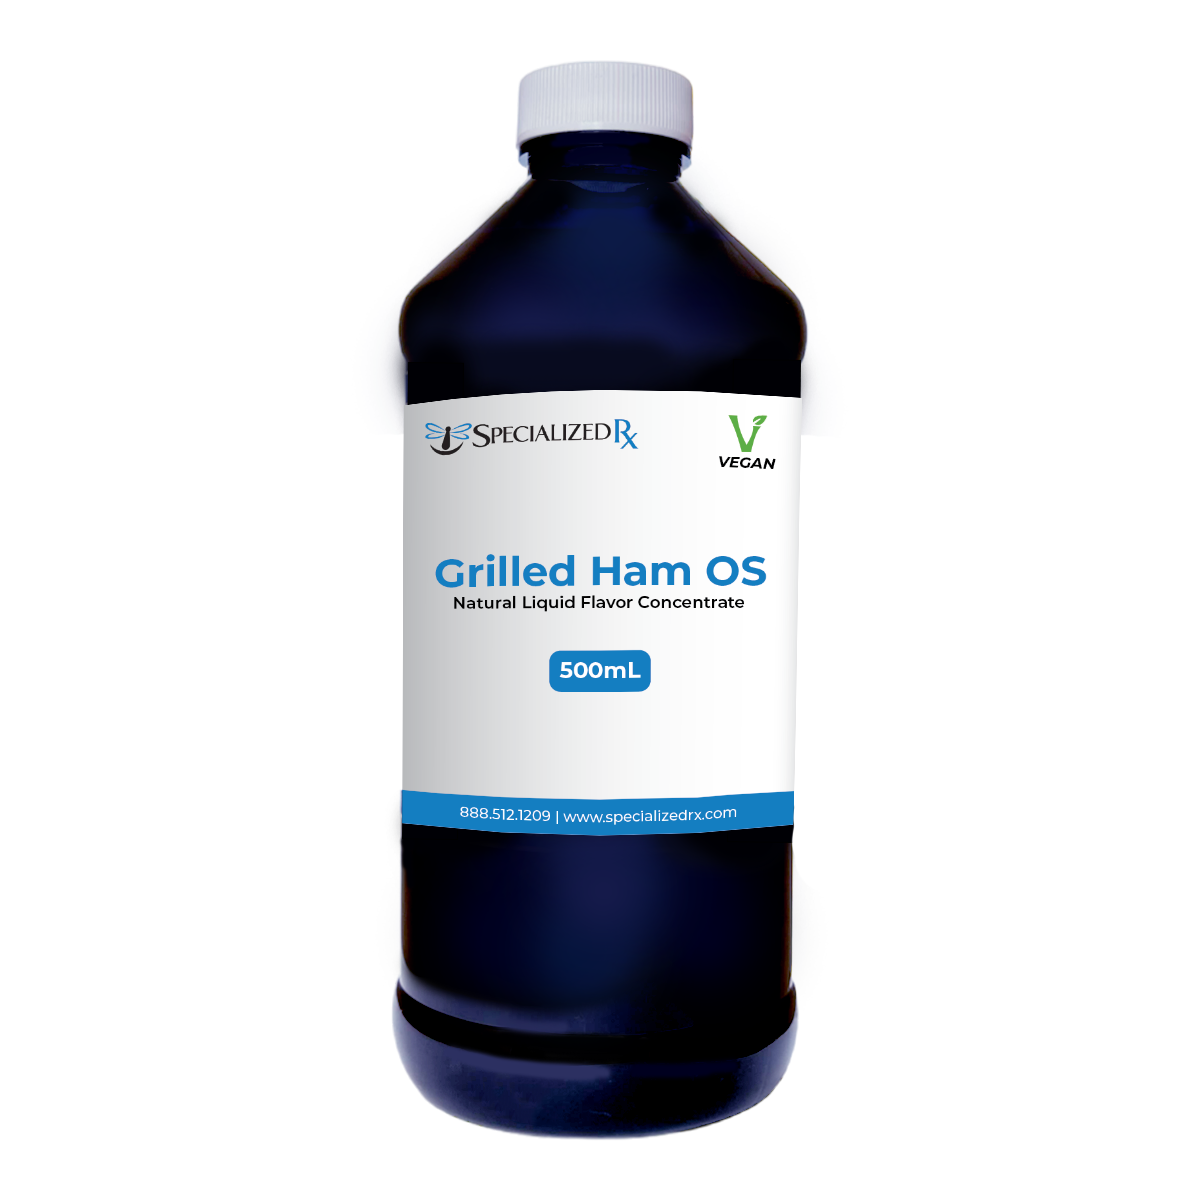 Grilled Ham OS Natural Liquid Flavor Concentrate - Vegan